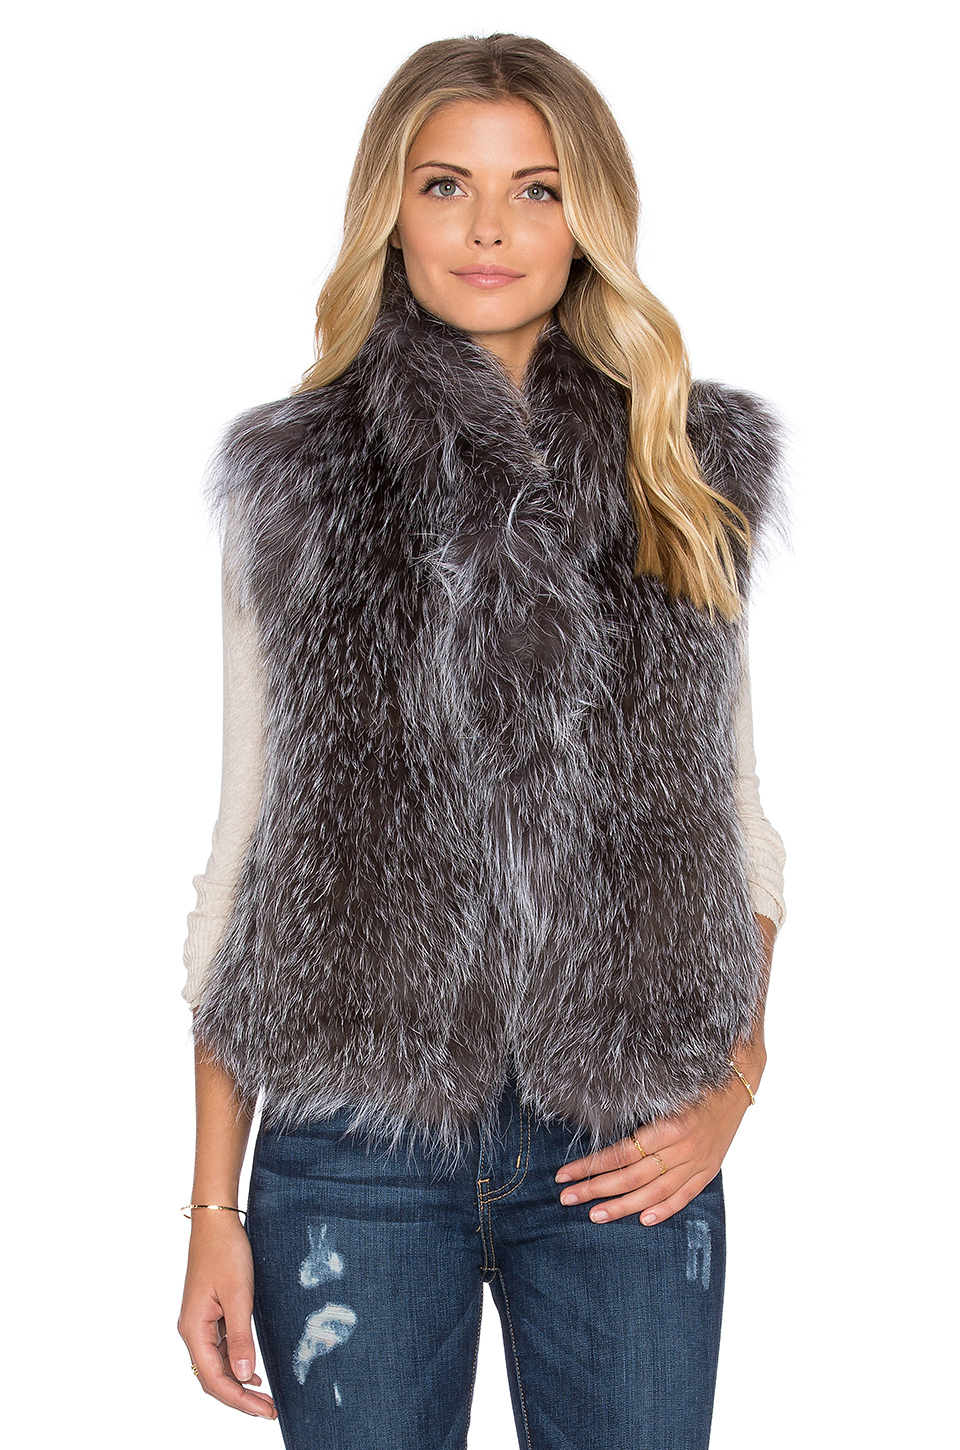 Lyst - June Knitted Fox-Fur Vest in Gray